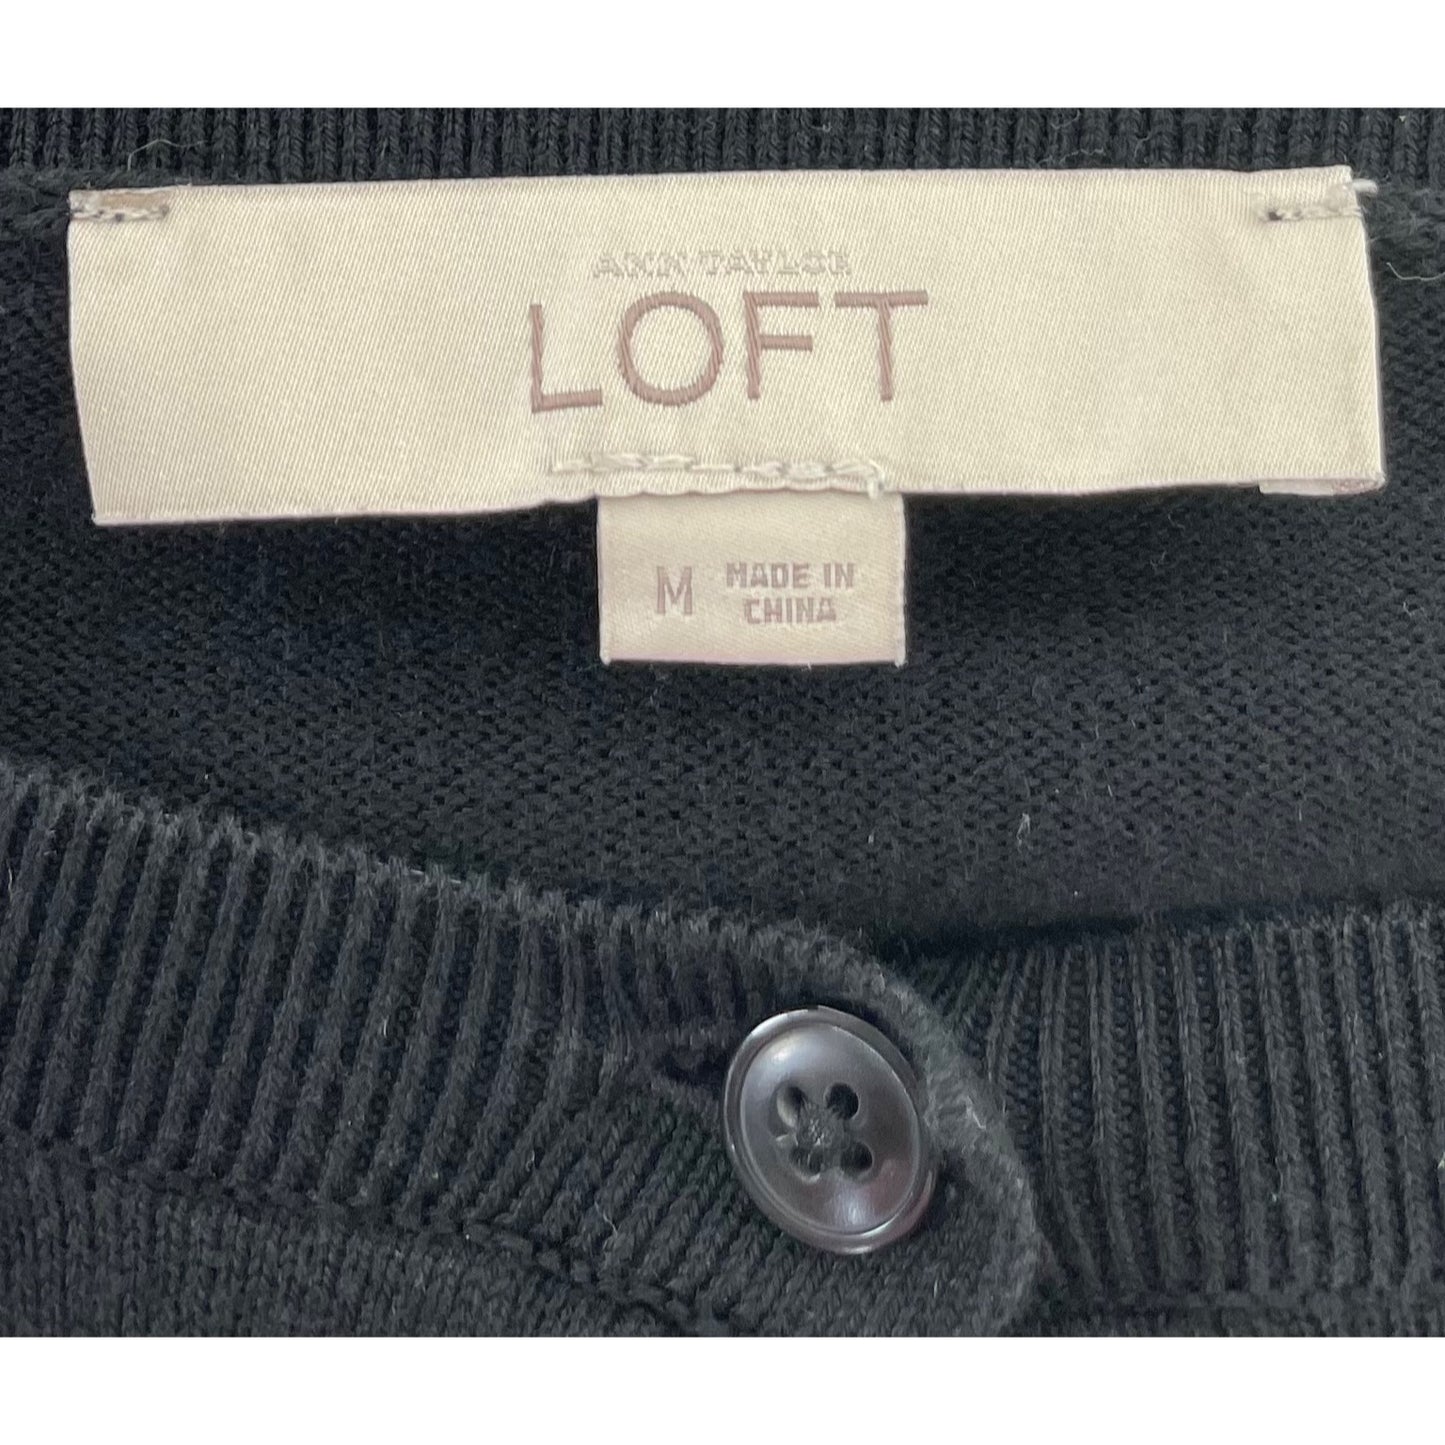 LOFT Women's Size Medium Black Button-Down Cardigan